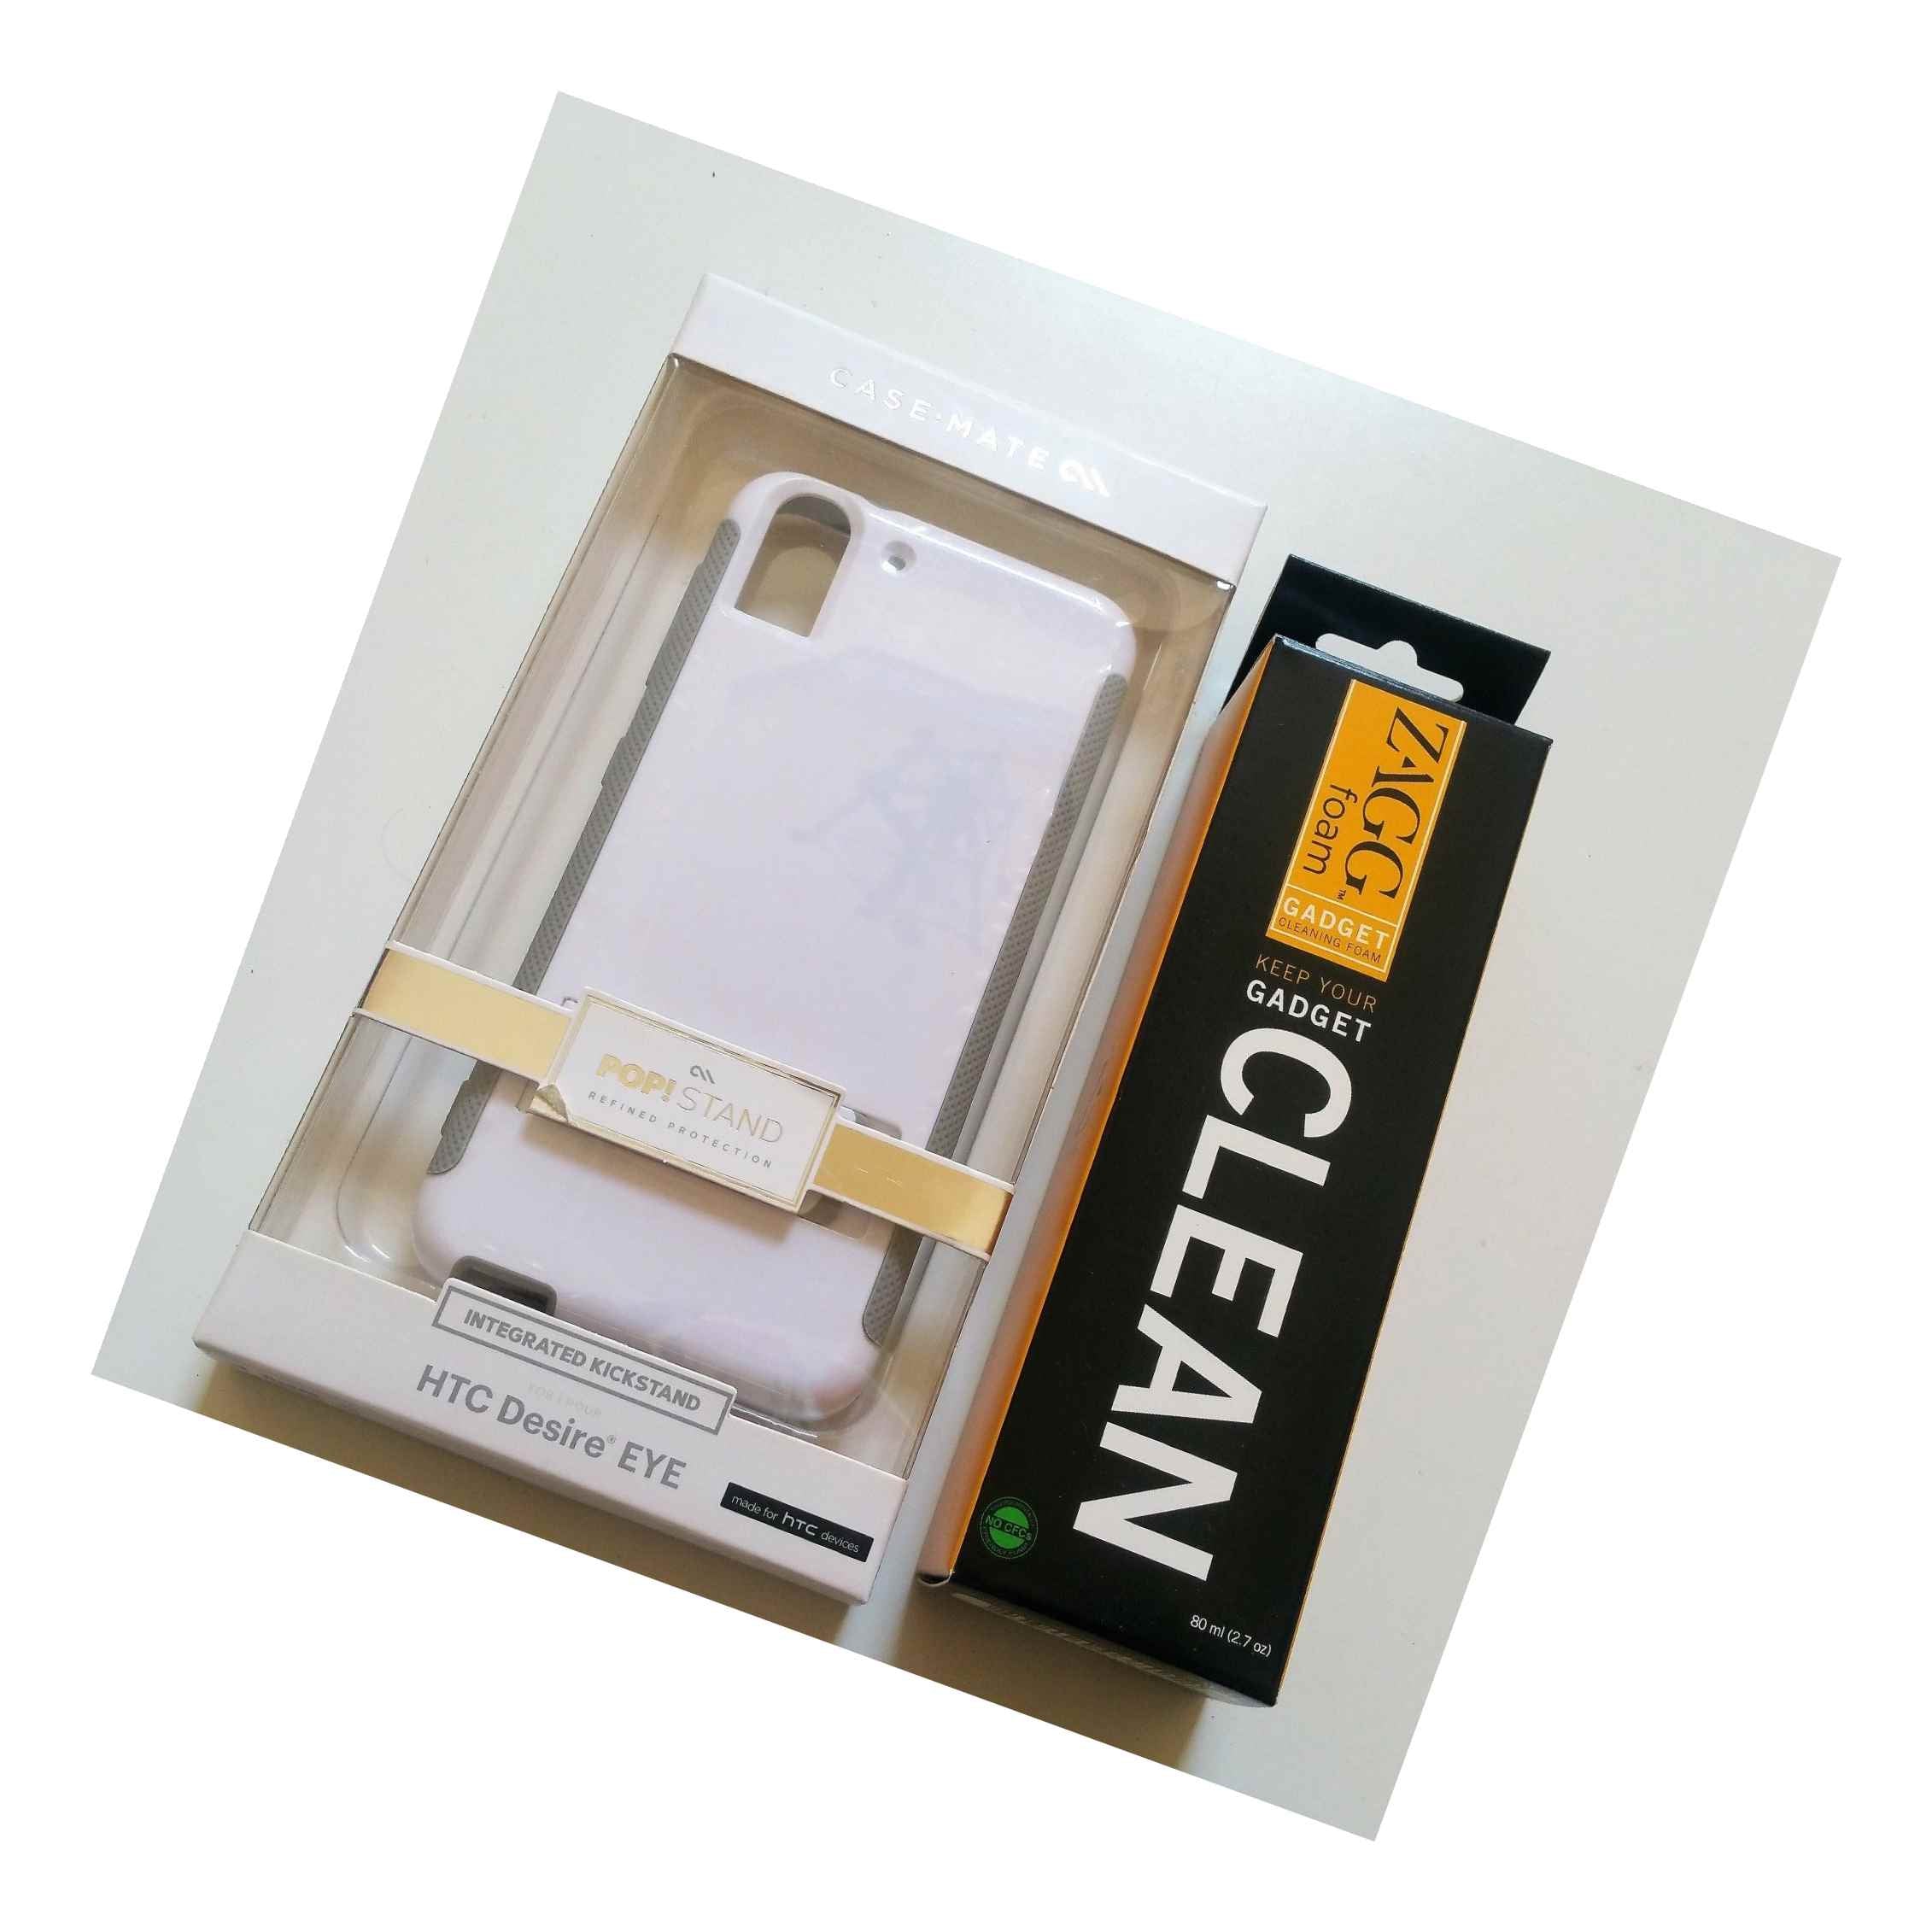 Menagerry Gespierd speelplaats CaseMate POP! Stand Case Cover HTC Desire EYE White / Gray + Free ZAGG –  Globaleparts